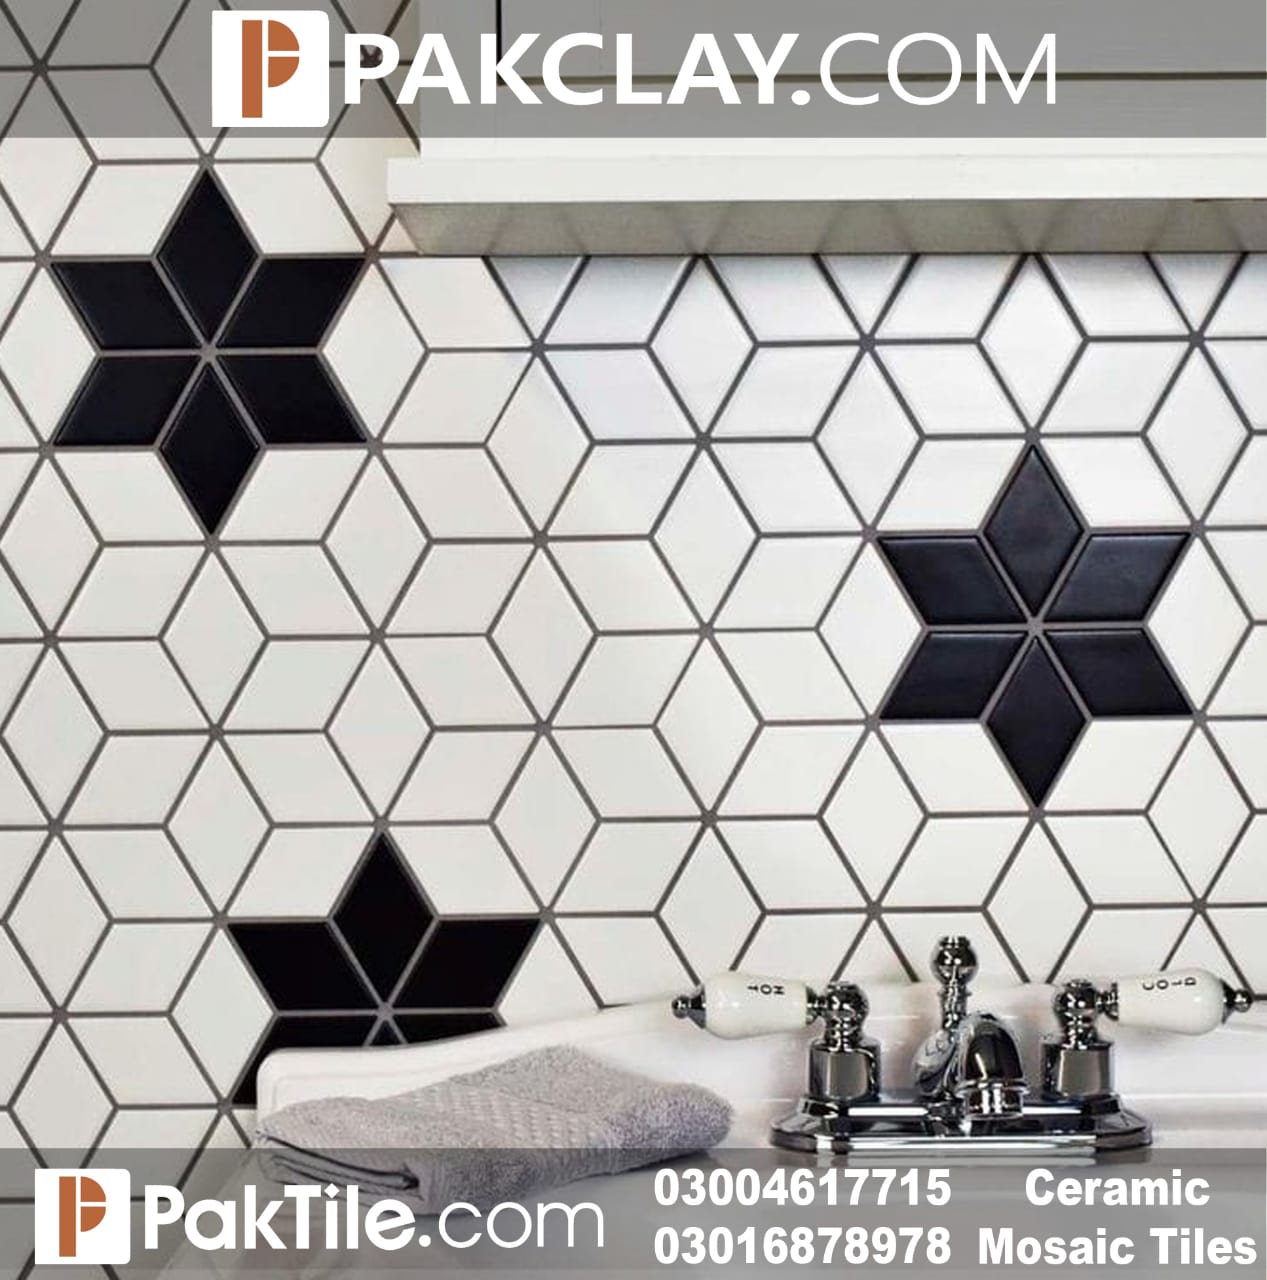 Pak Clay Black and White Mosaic Tile